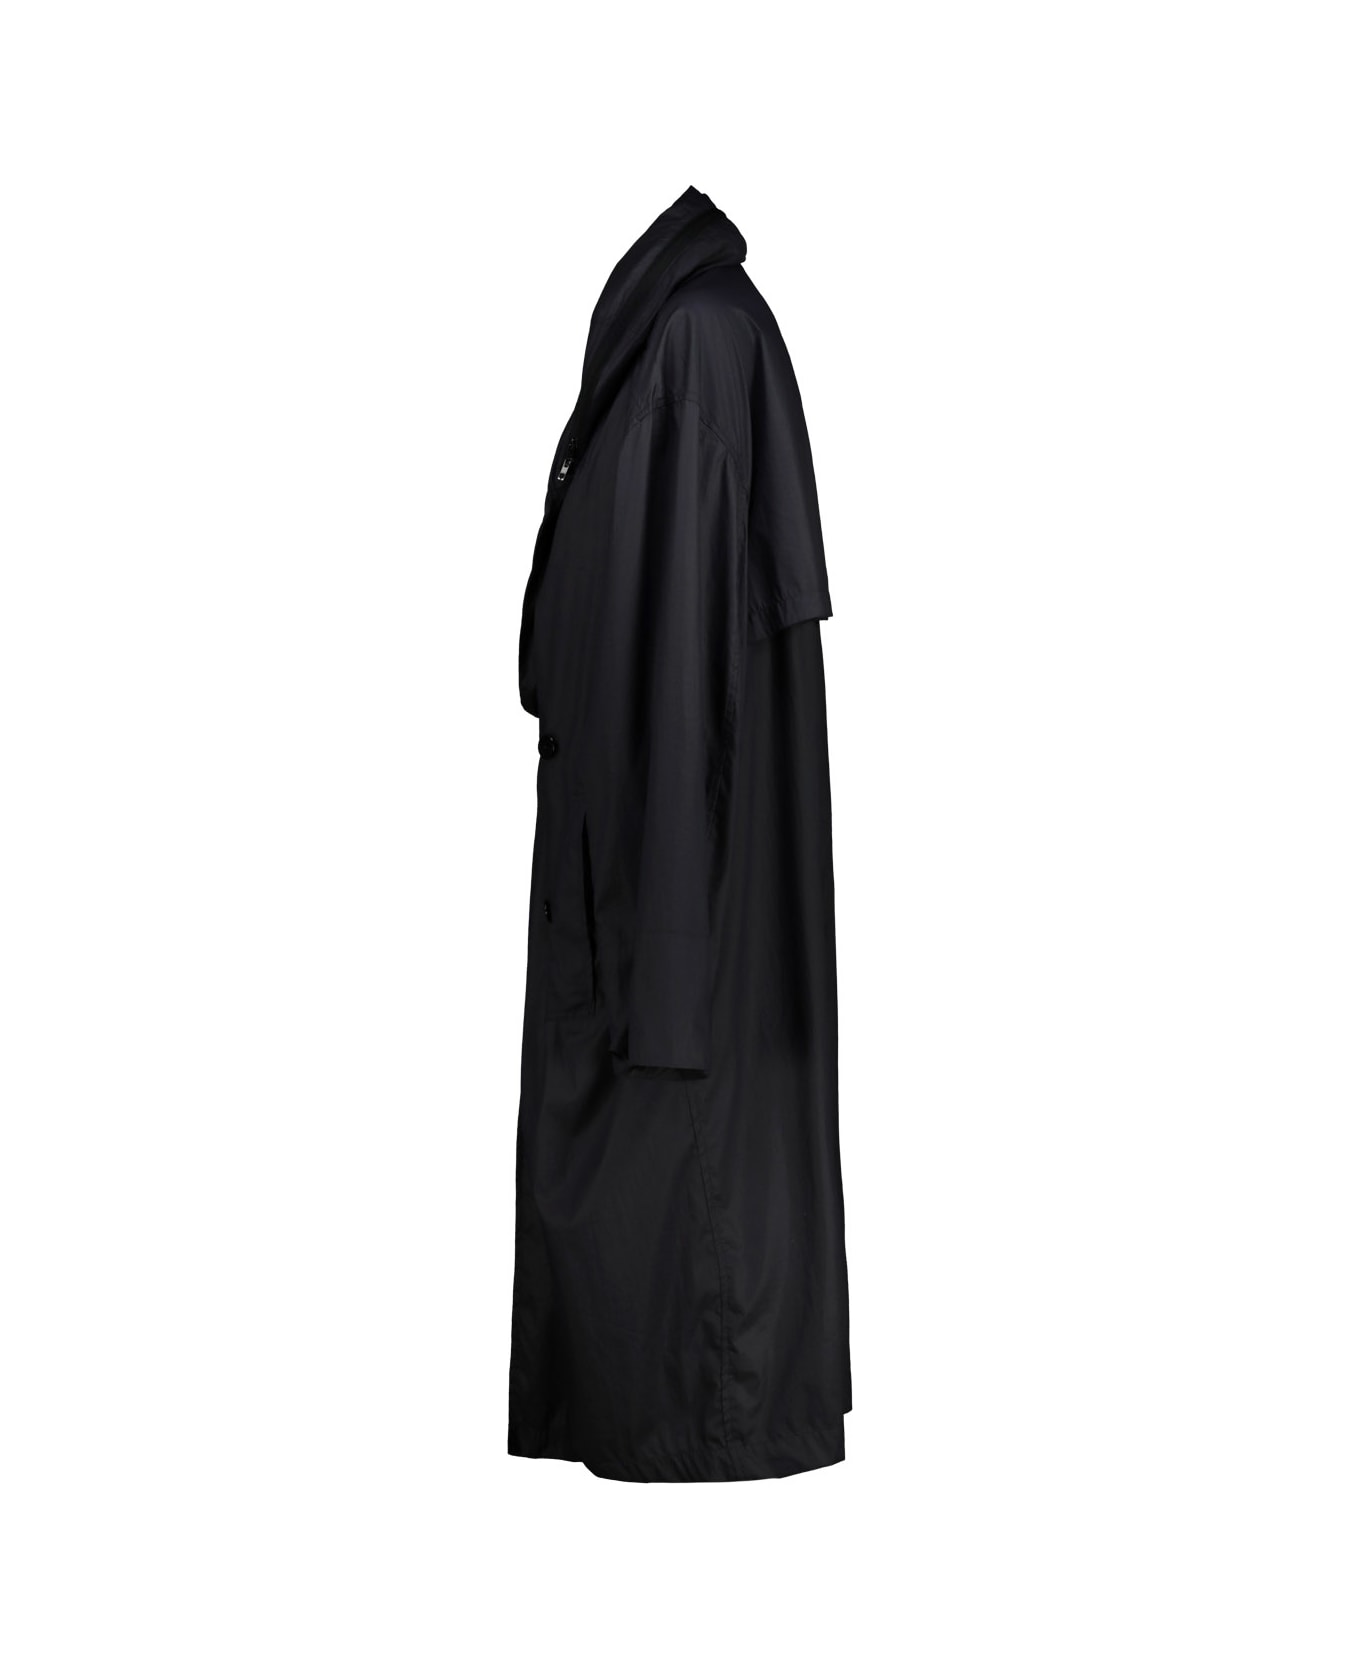 Lemaire Hooded Raincoat - Blue Black